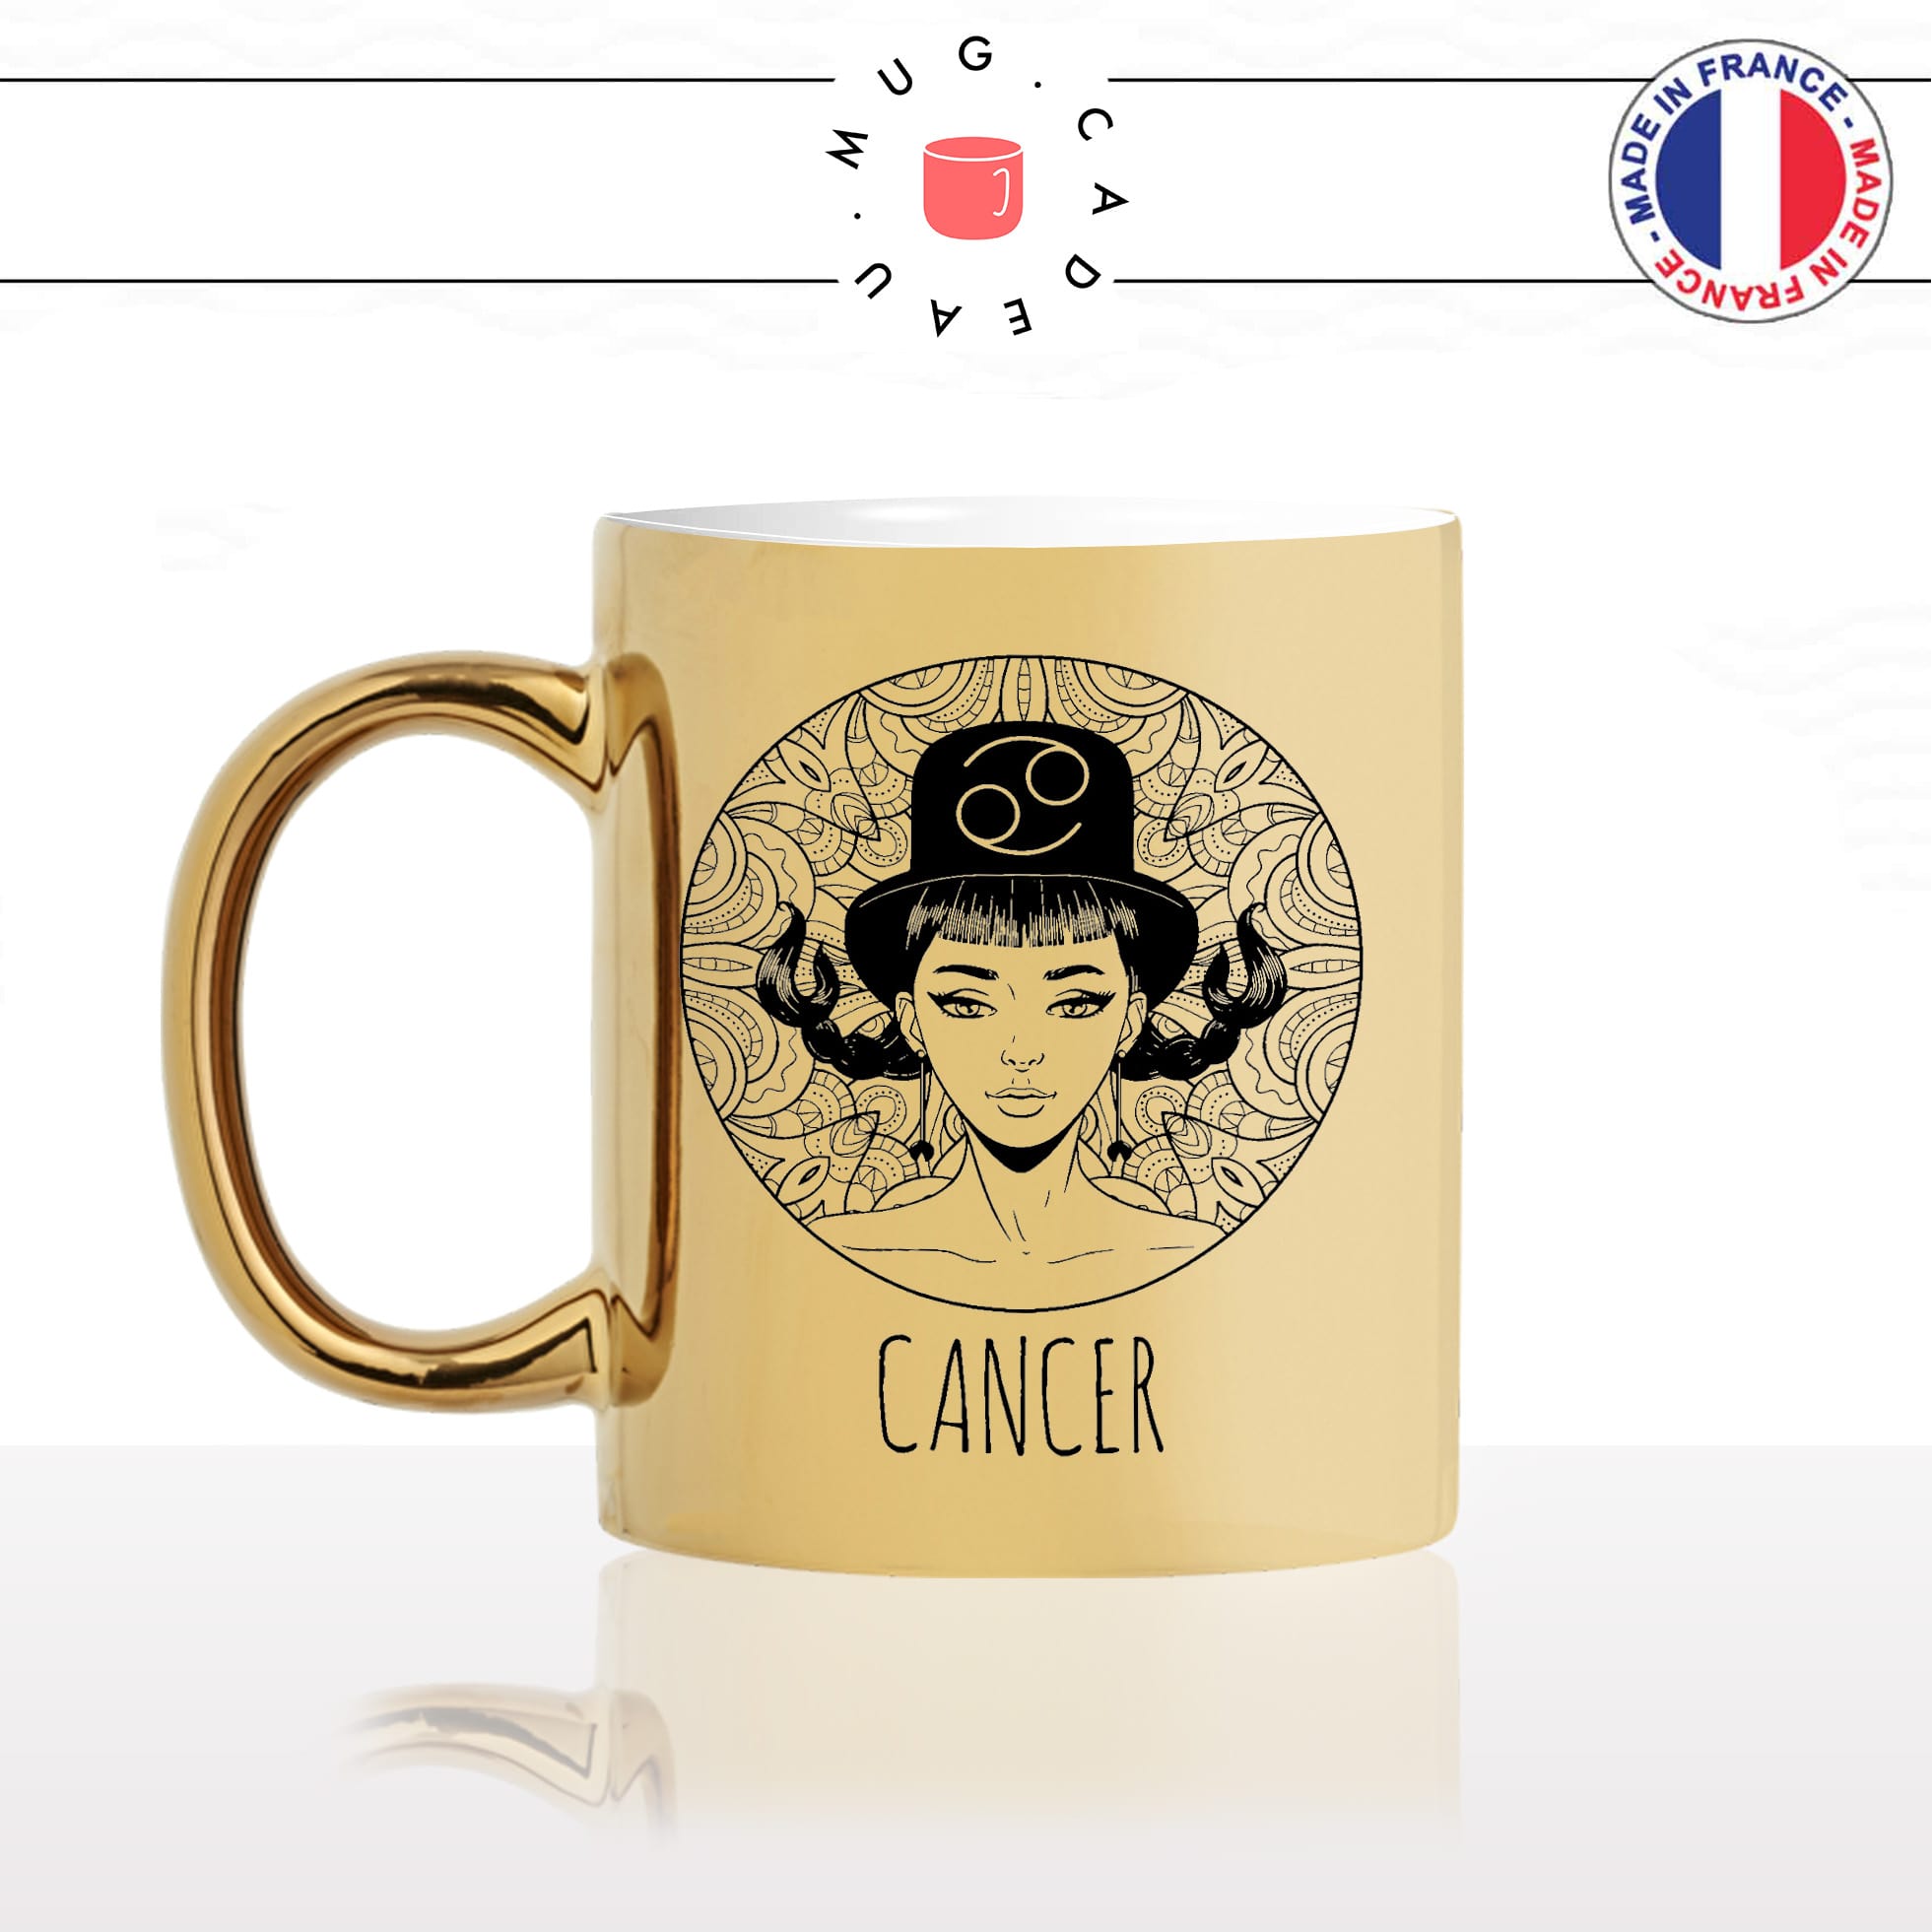 mug-tasse-or-doré-gold-signe-astrologique-astro-horoscope-cancer-dessin-femme-mignon-fun-idée-cadeau-originale-personnalisé-min